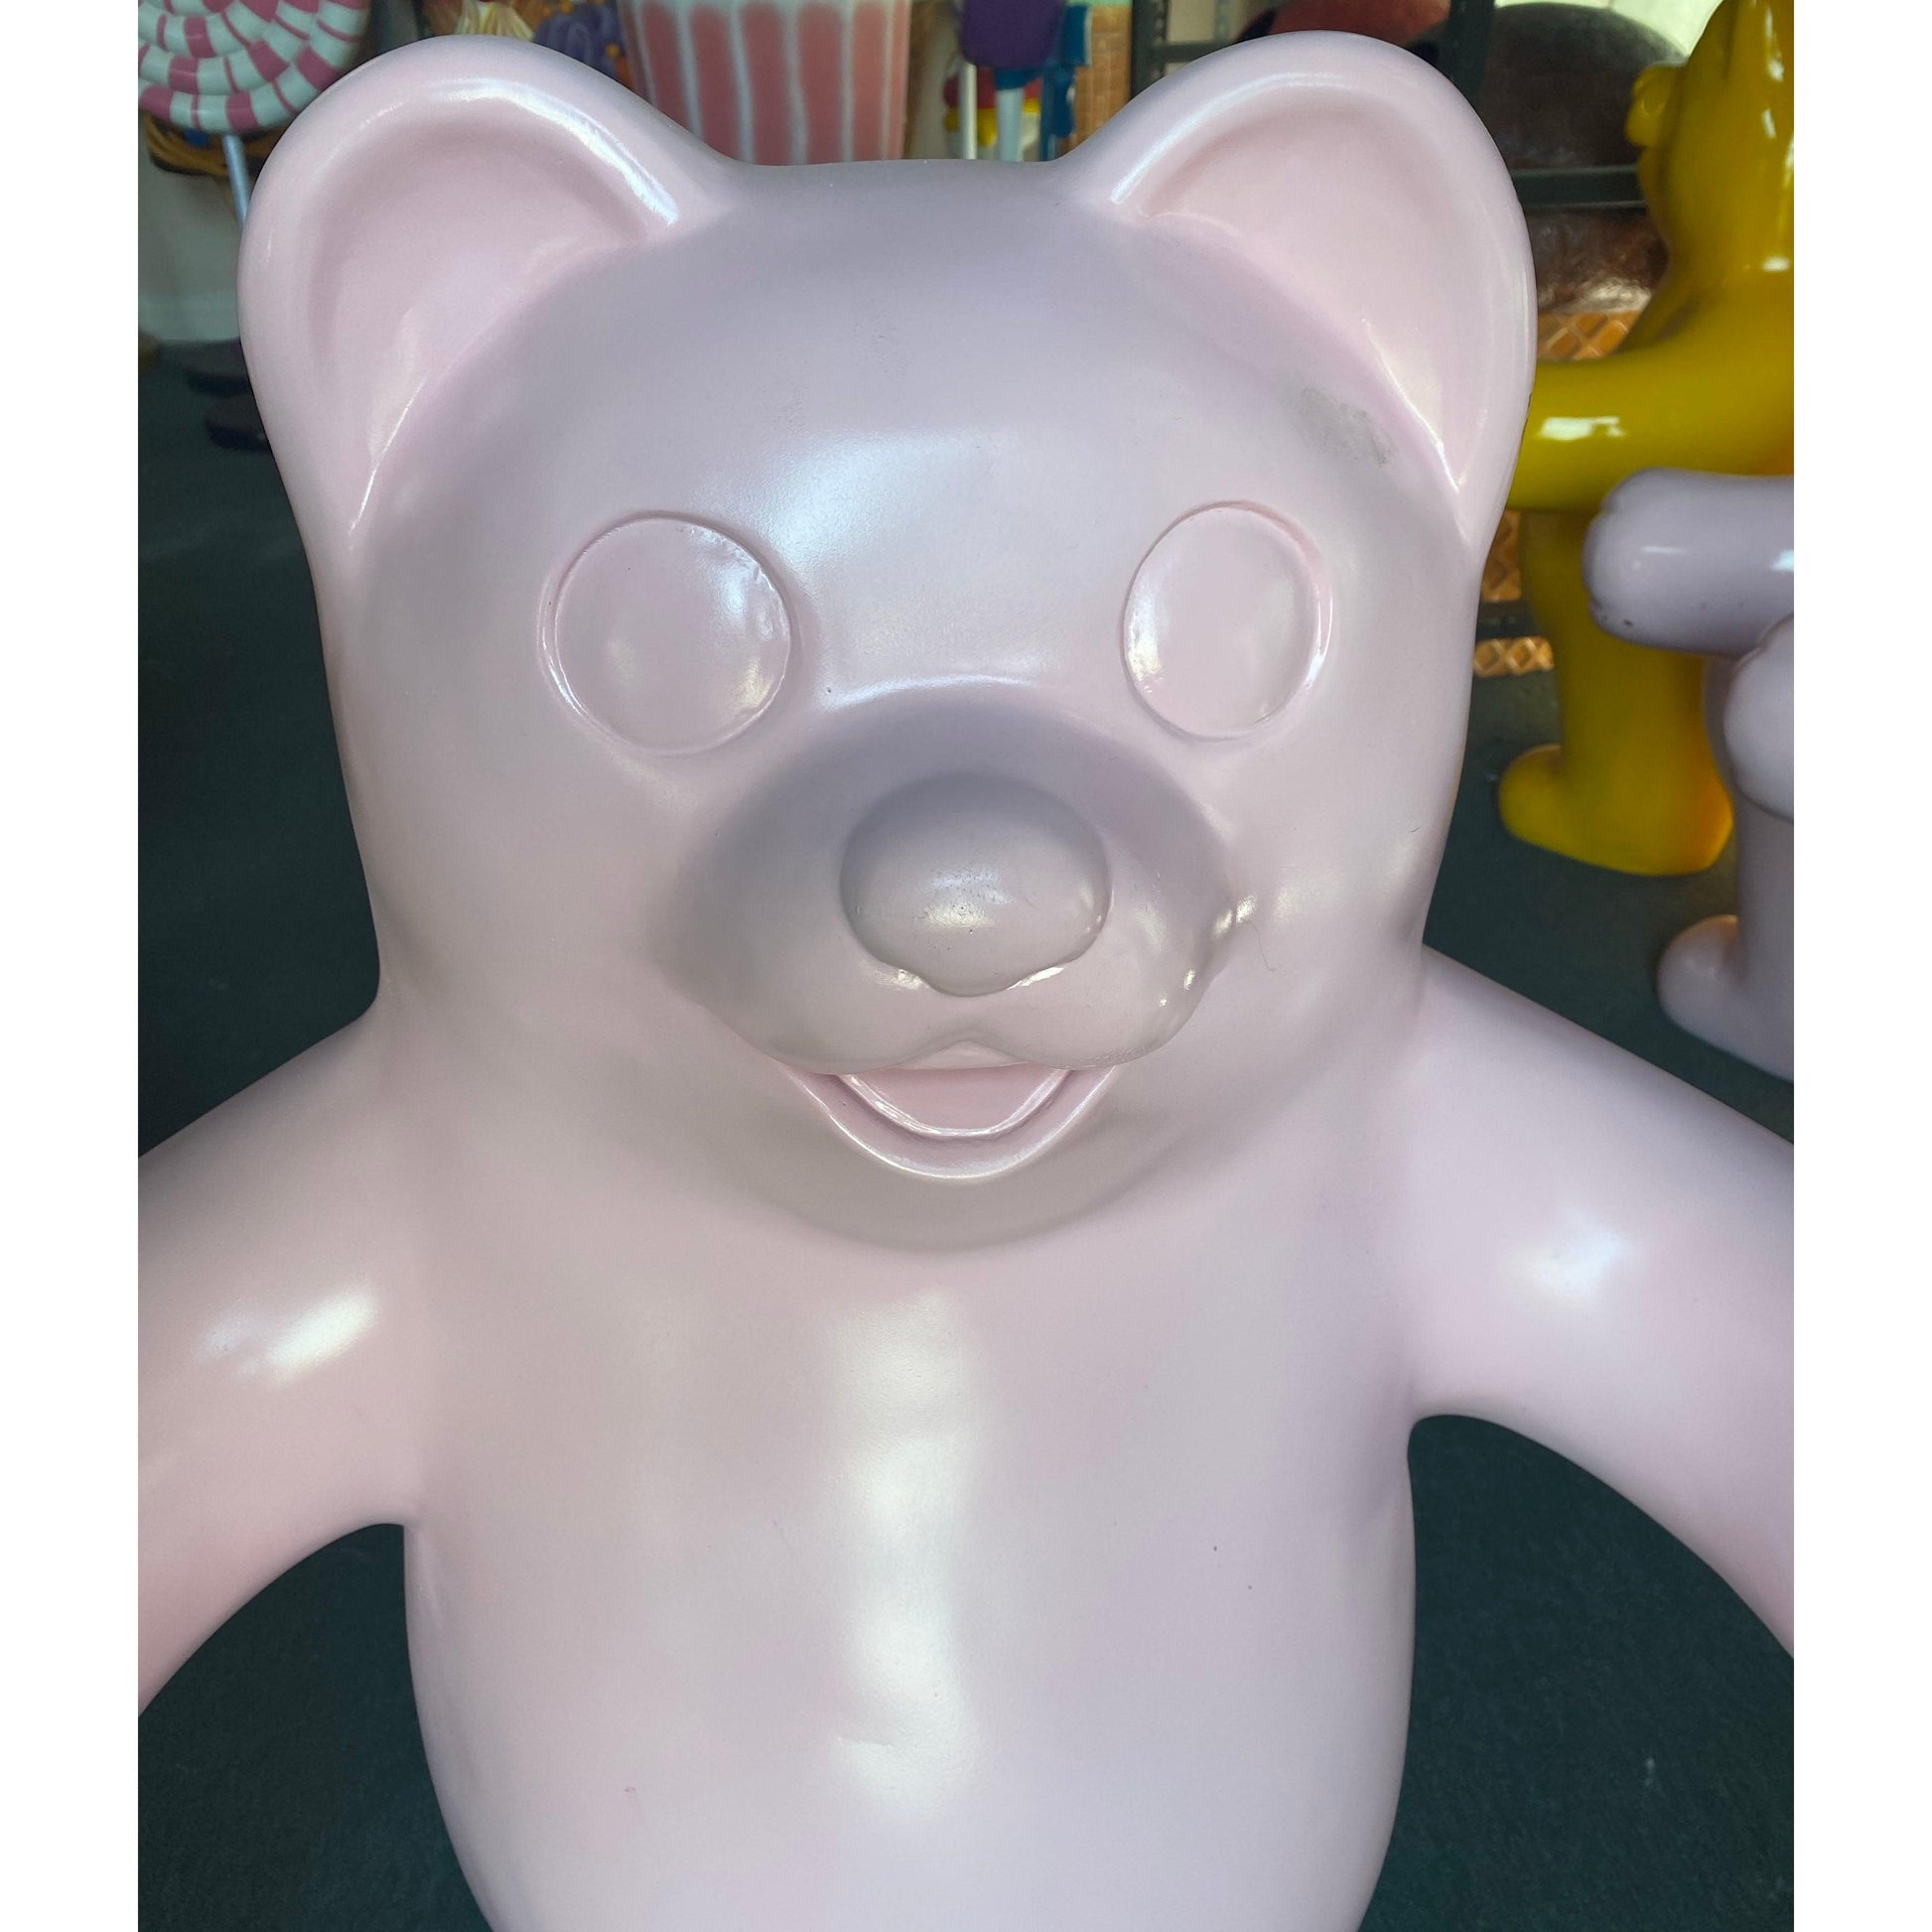 Large Pink Gummy Bear Statue - LM Treasures Prop Rentals 